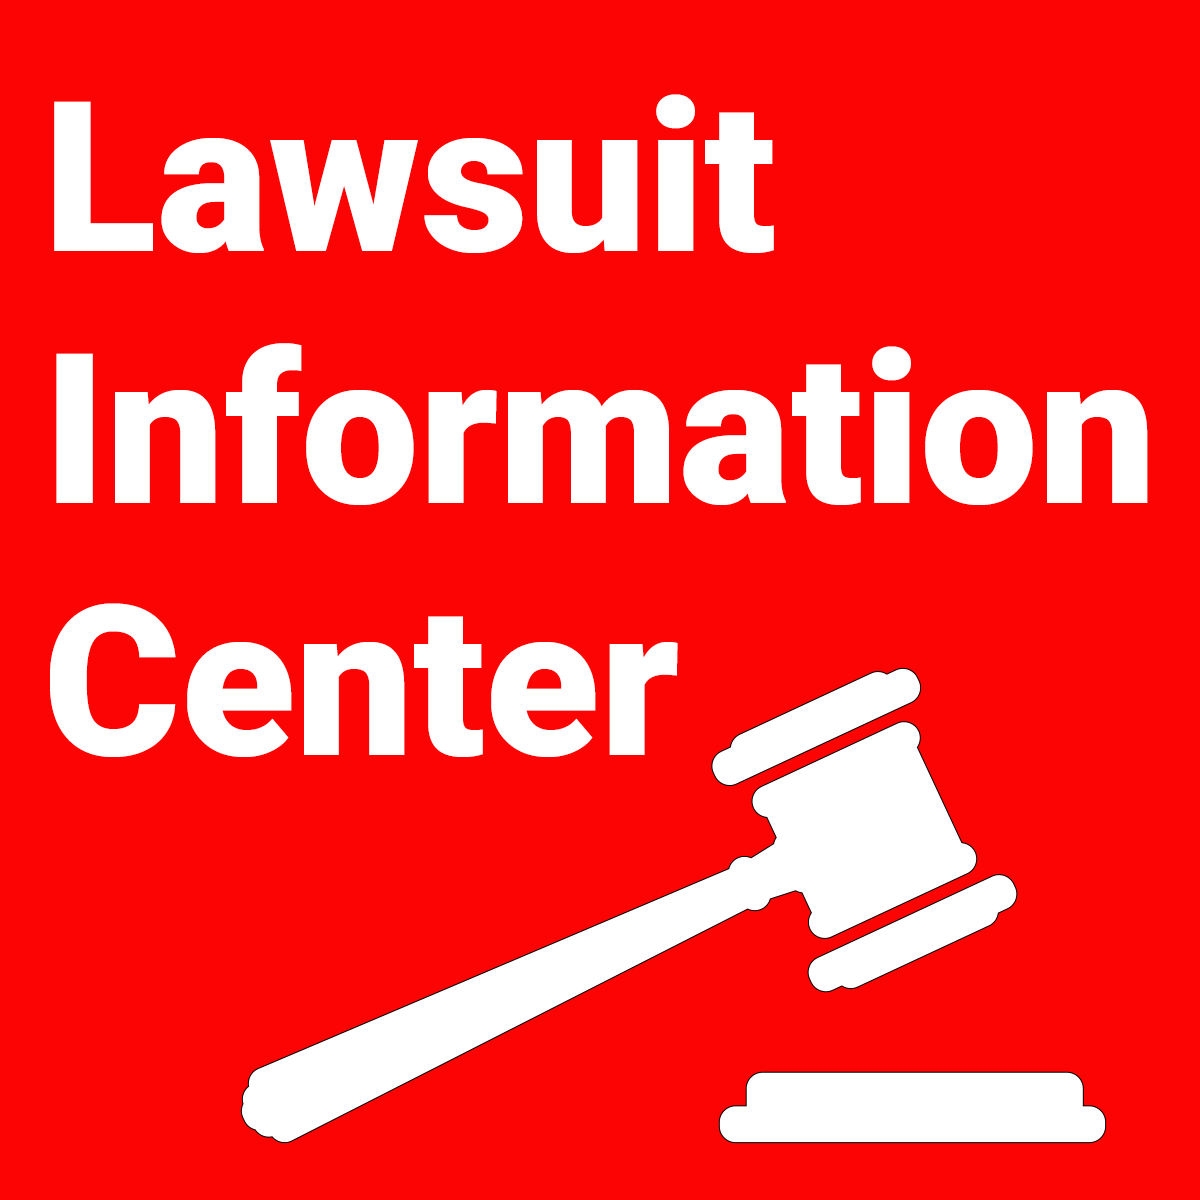 www.lawsuit-information-center.com